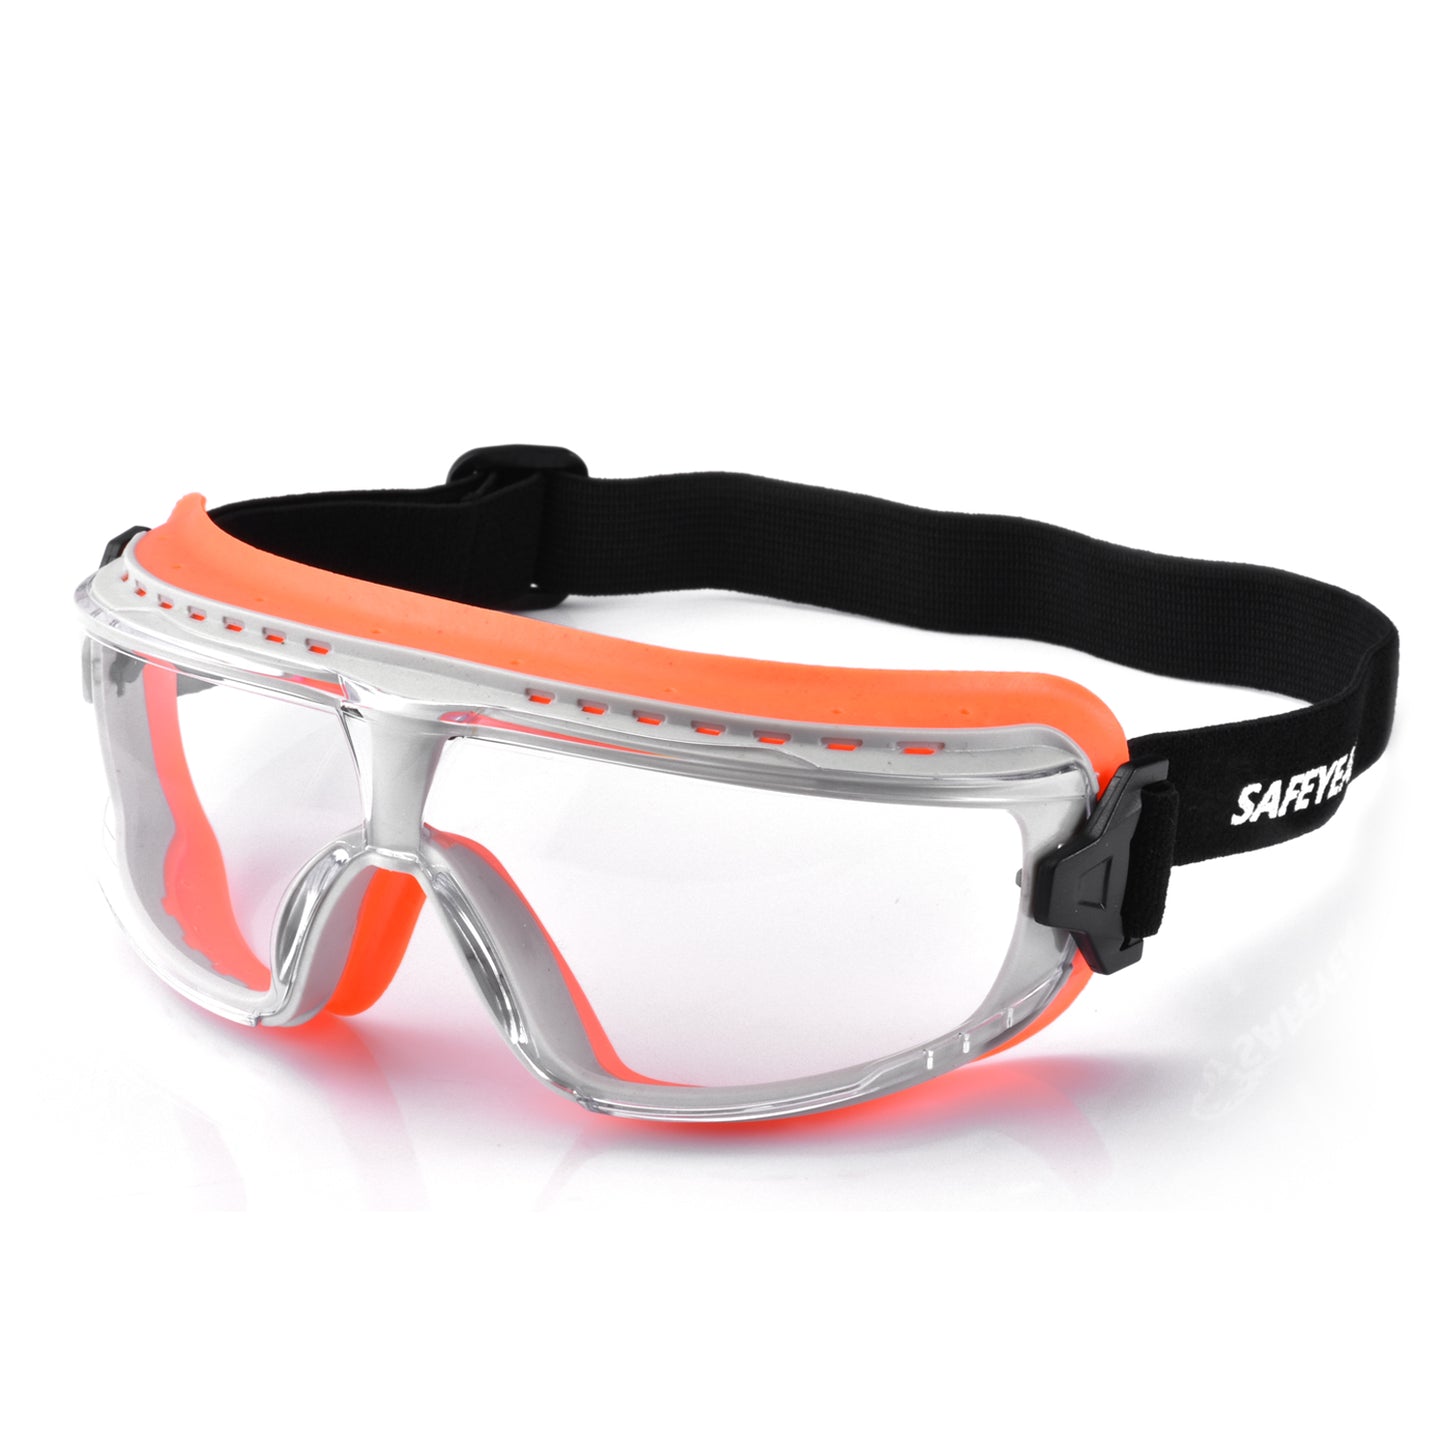 SAFEYEAR Safety Glasses Anti Fog Safety Work Goggles【ANSI Z87.1】Scratch Resistant HD Lens UV400 Protection Adjustable Strap Frame Style 360 EYE Protection